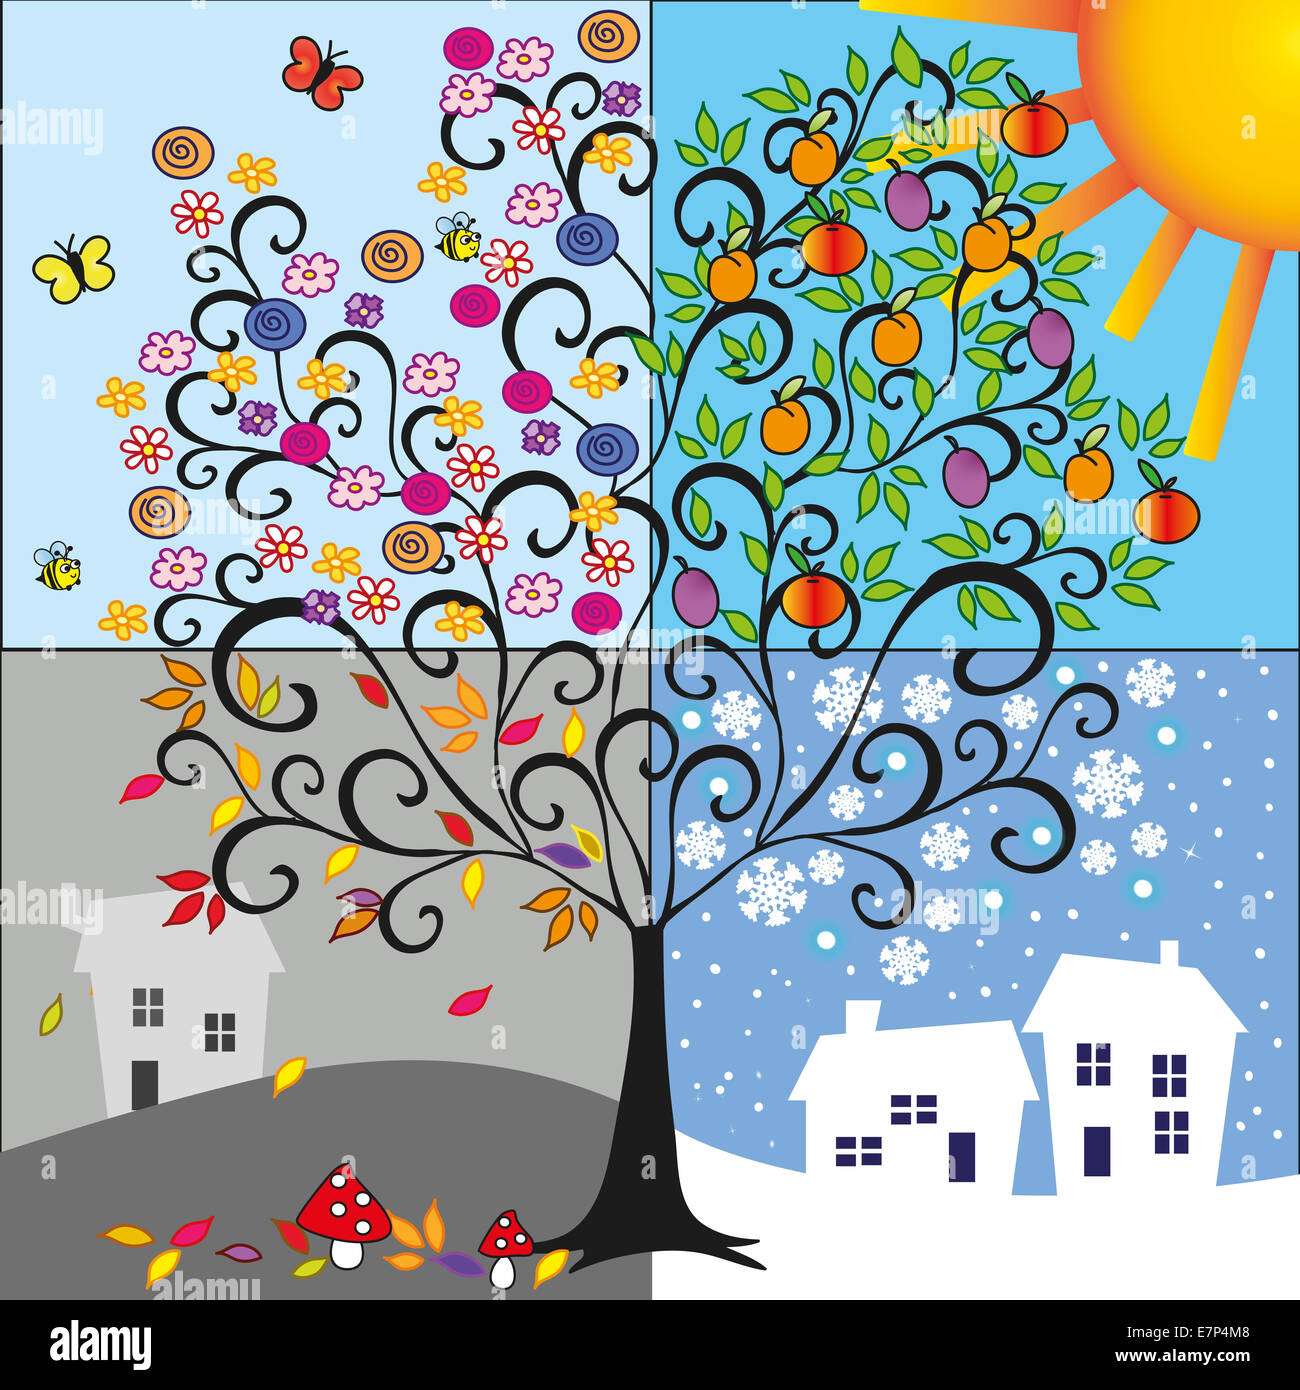 Illustration of tree representing the four seasons: spring, summer, autumn, winter. Stock Photo